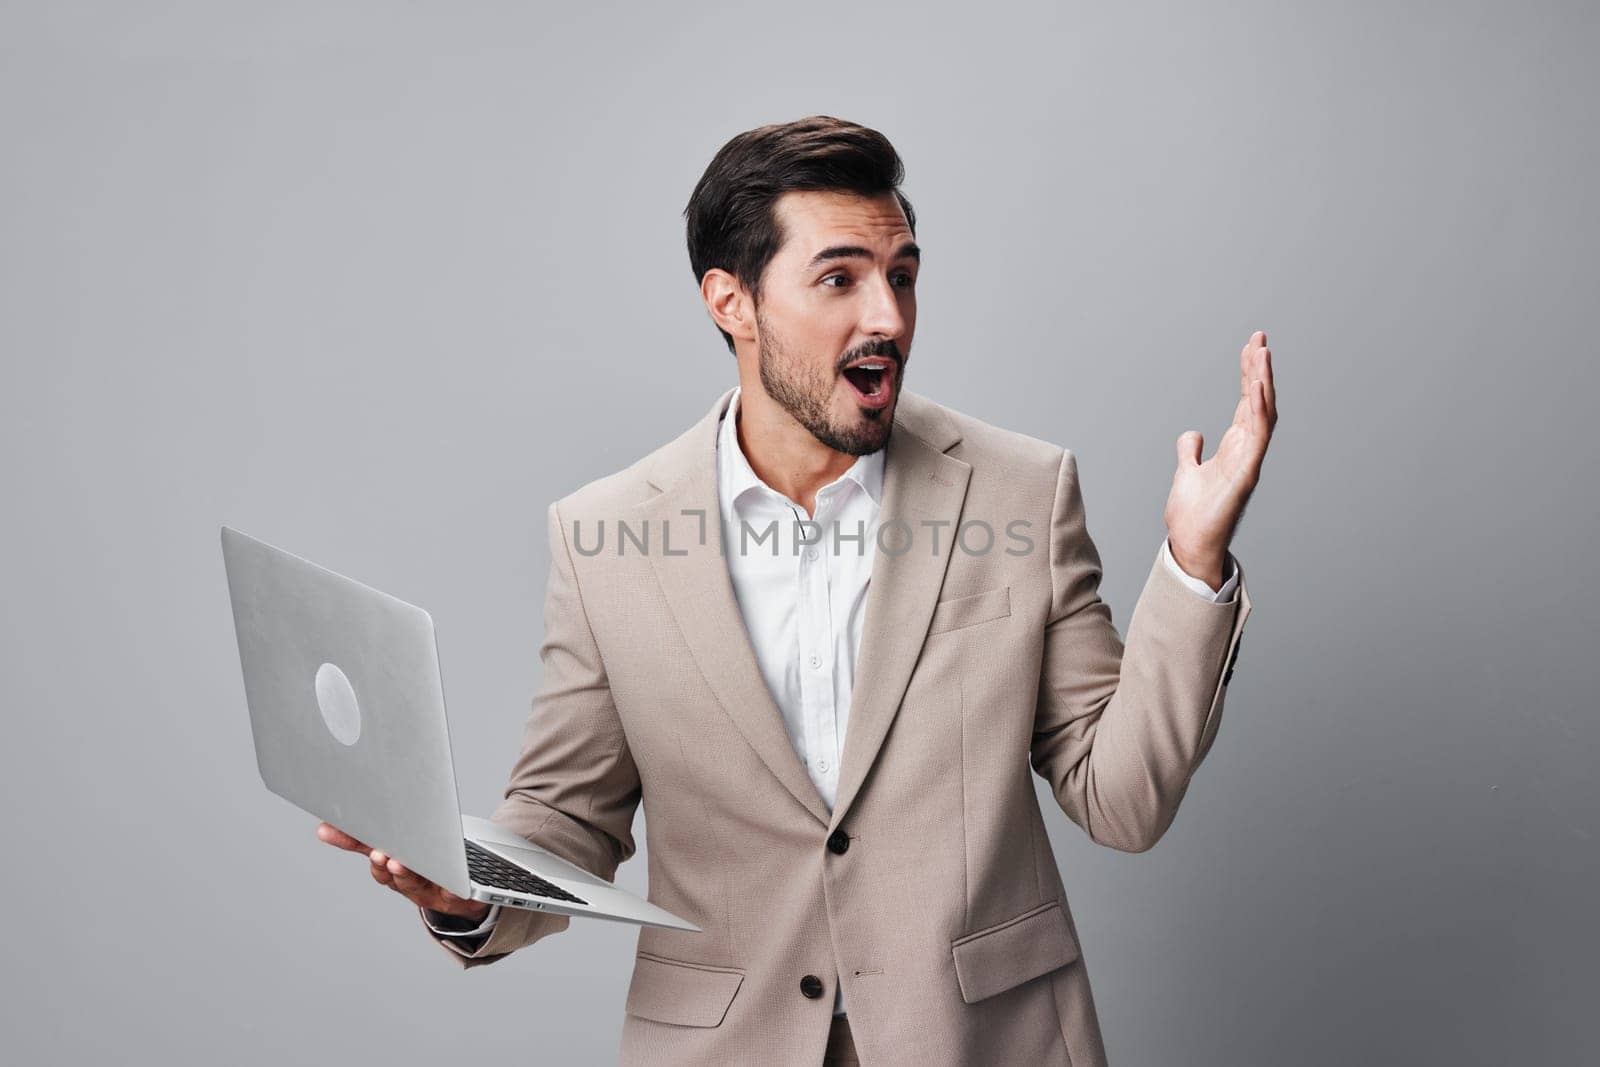 man smiling freelancer online shirt job computer laptop person beige model internet network beard cheerful copyspace cyberspace office business stylish suit